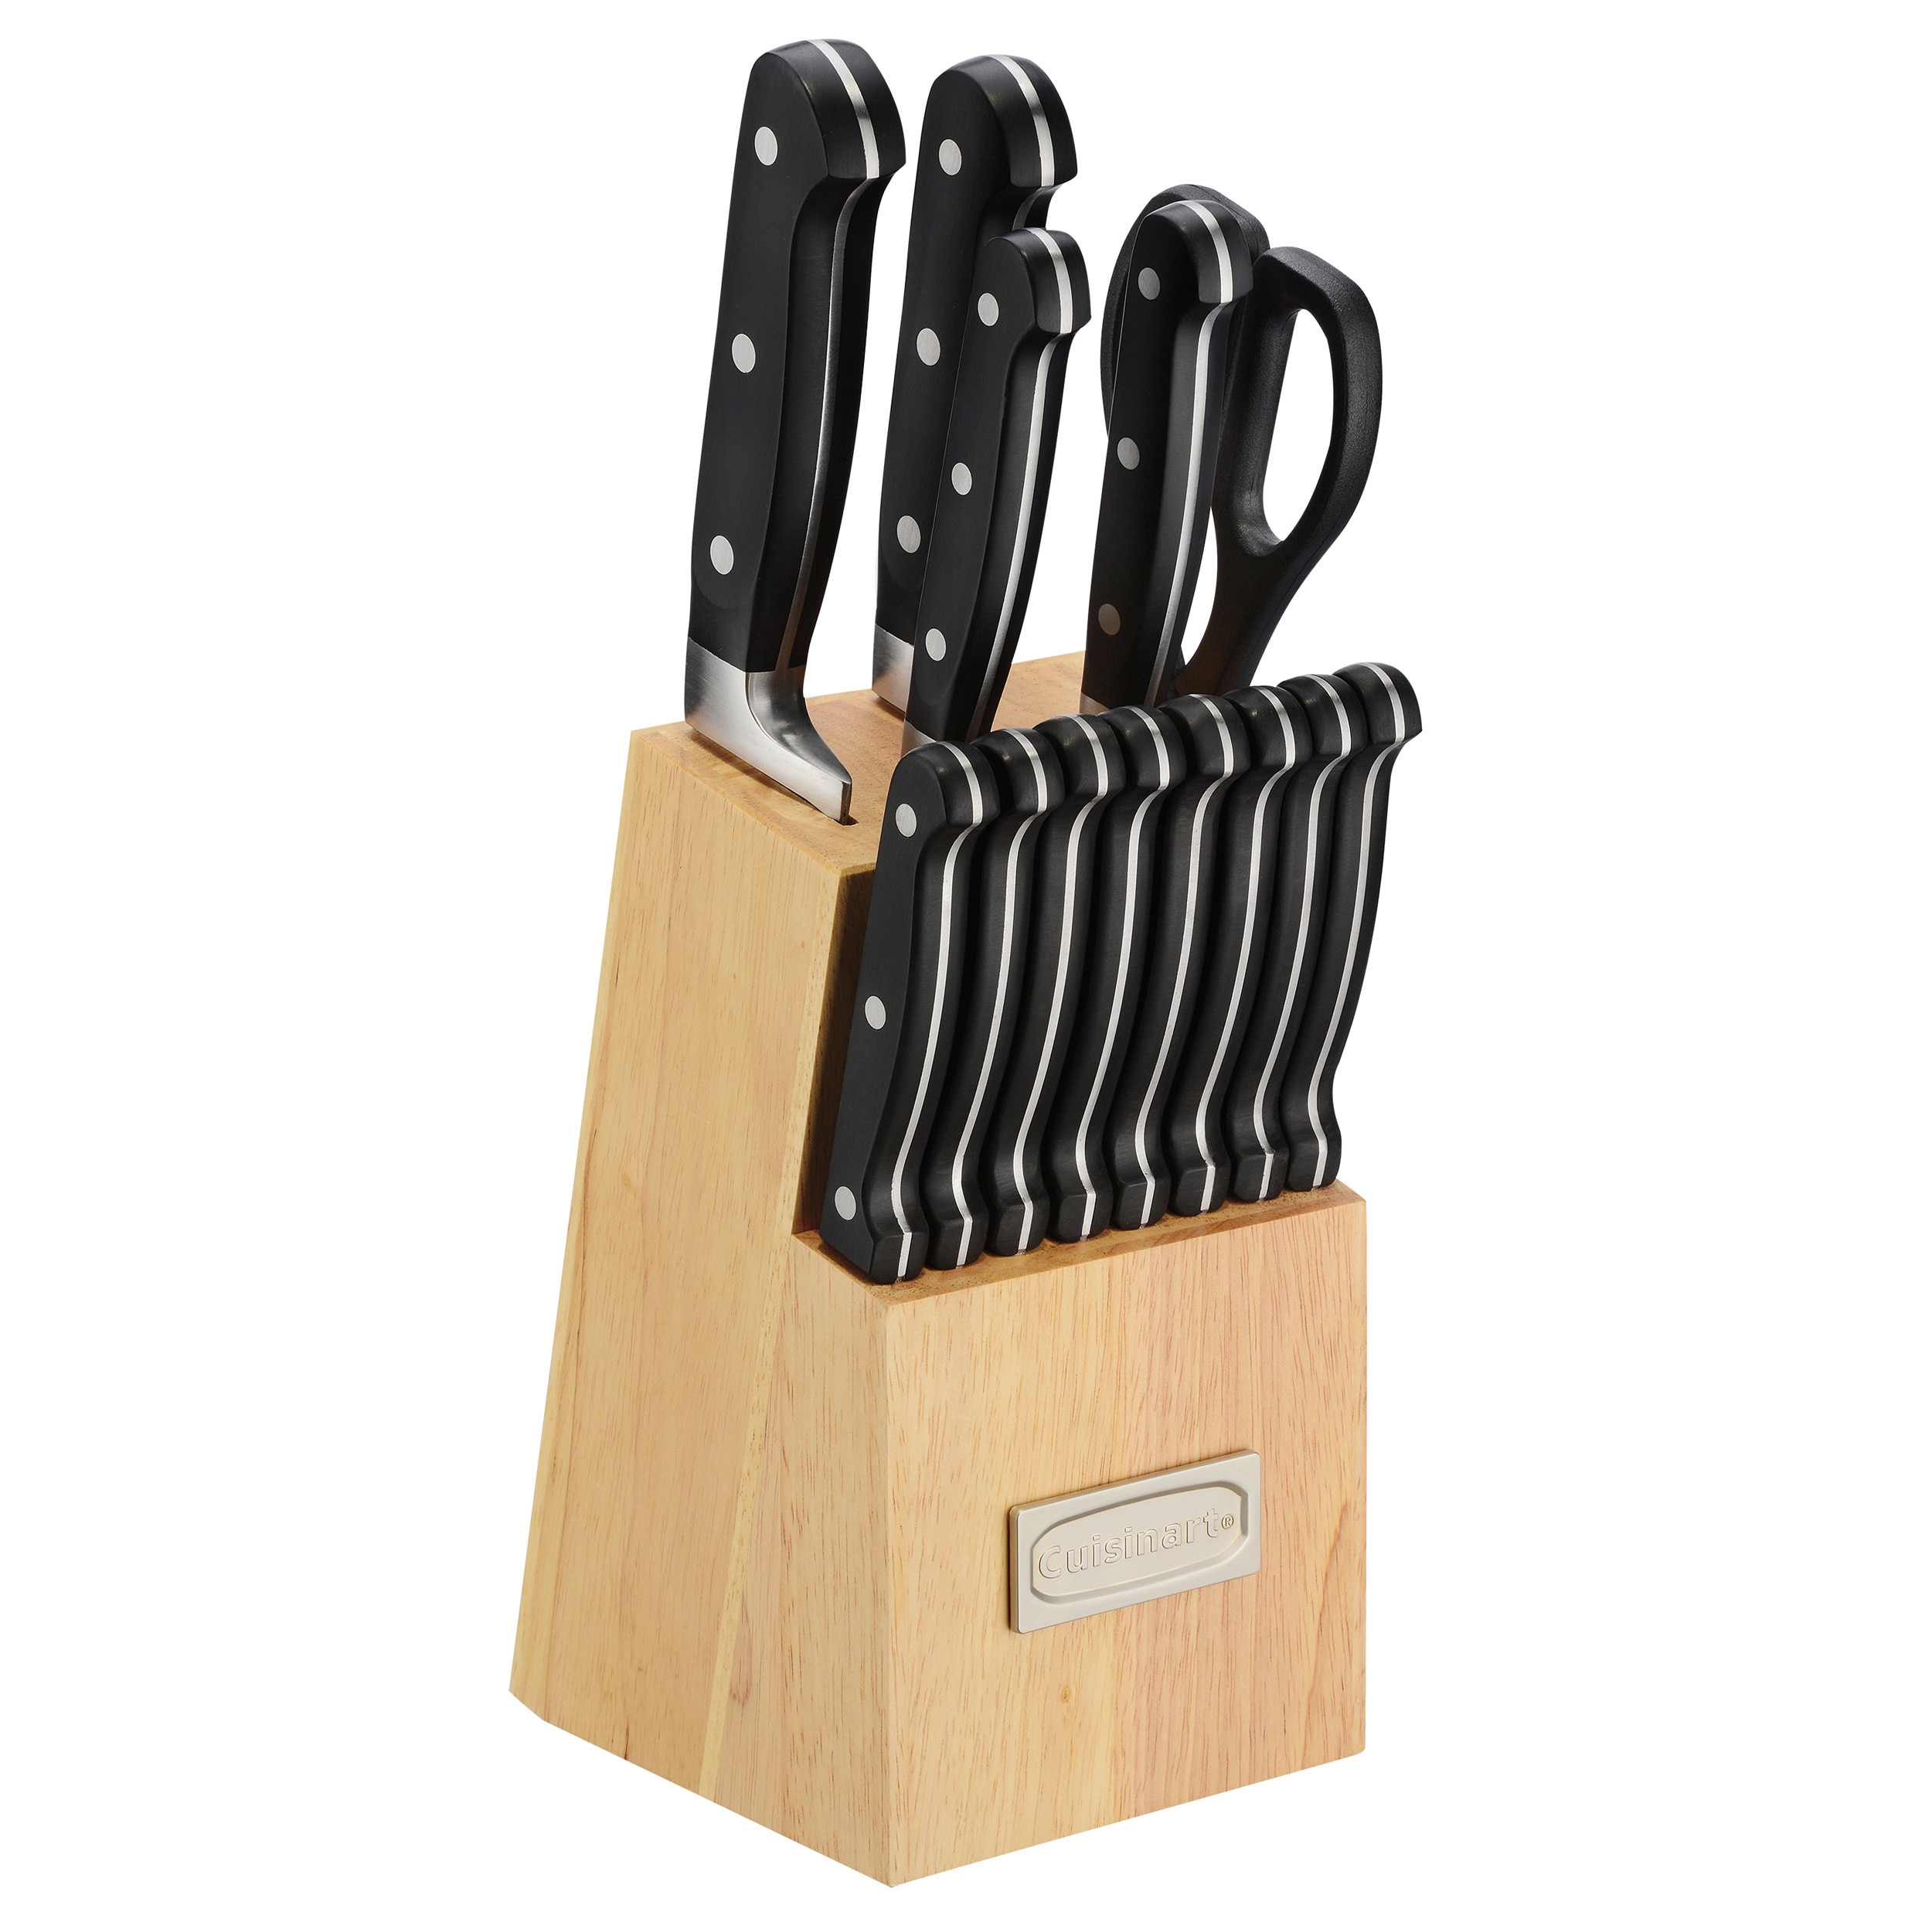 https://ak1.ostkcdn.com/images/products/8423016/Cuisinart-14-piece-Triple-Rivet-Cutlery-Block-Set-75b6b31b-26c9-4592-be02-b0fe0a7809ea.jpg